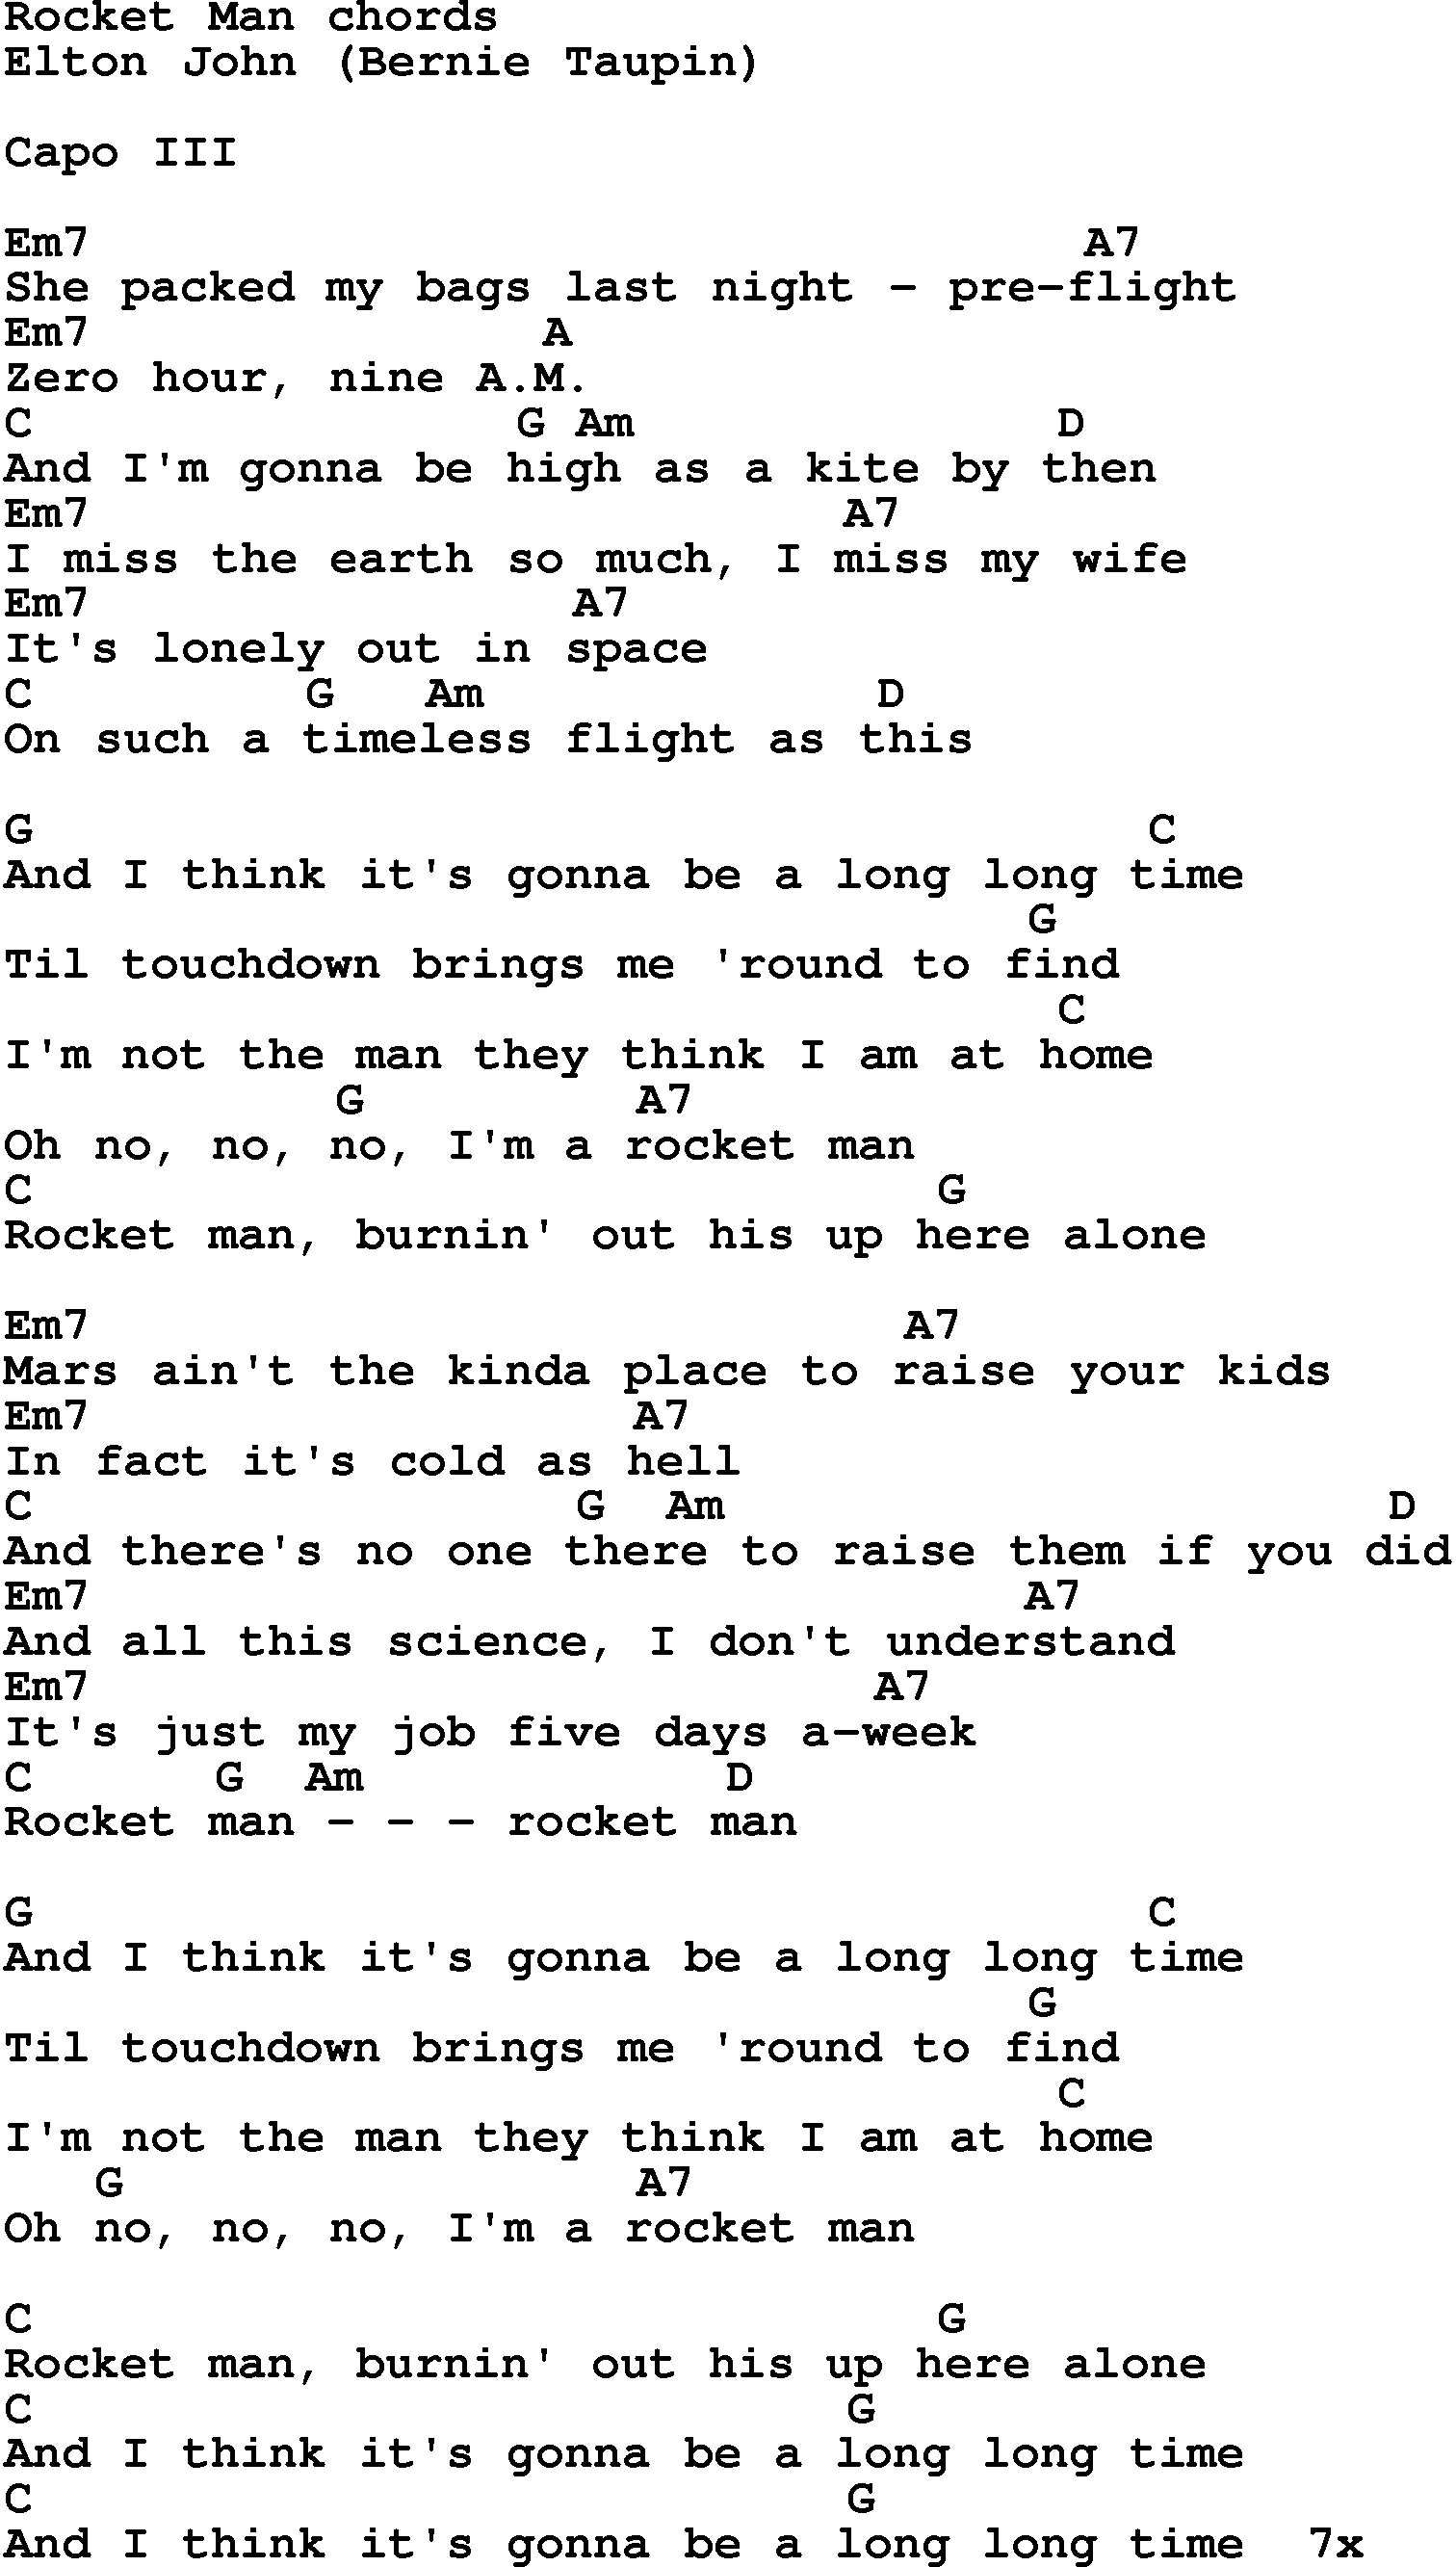 Piano Man Chords Song Lyrics With Guitar Chords For Rocket Man